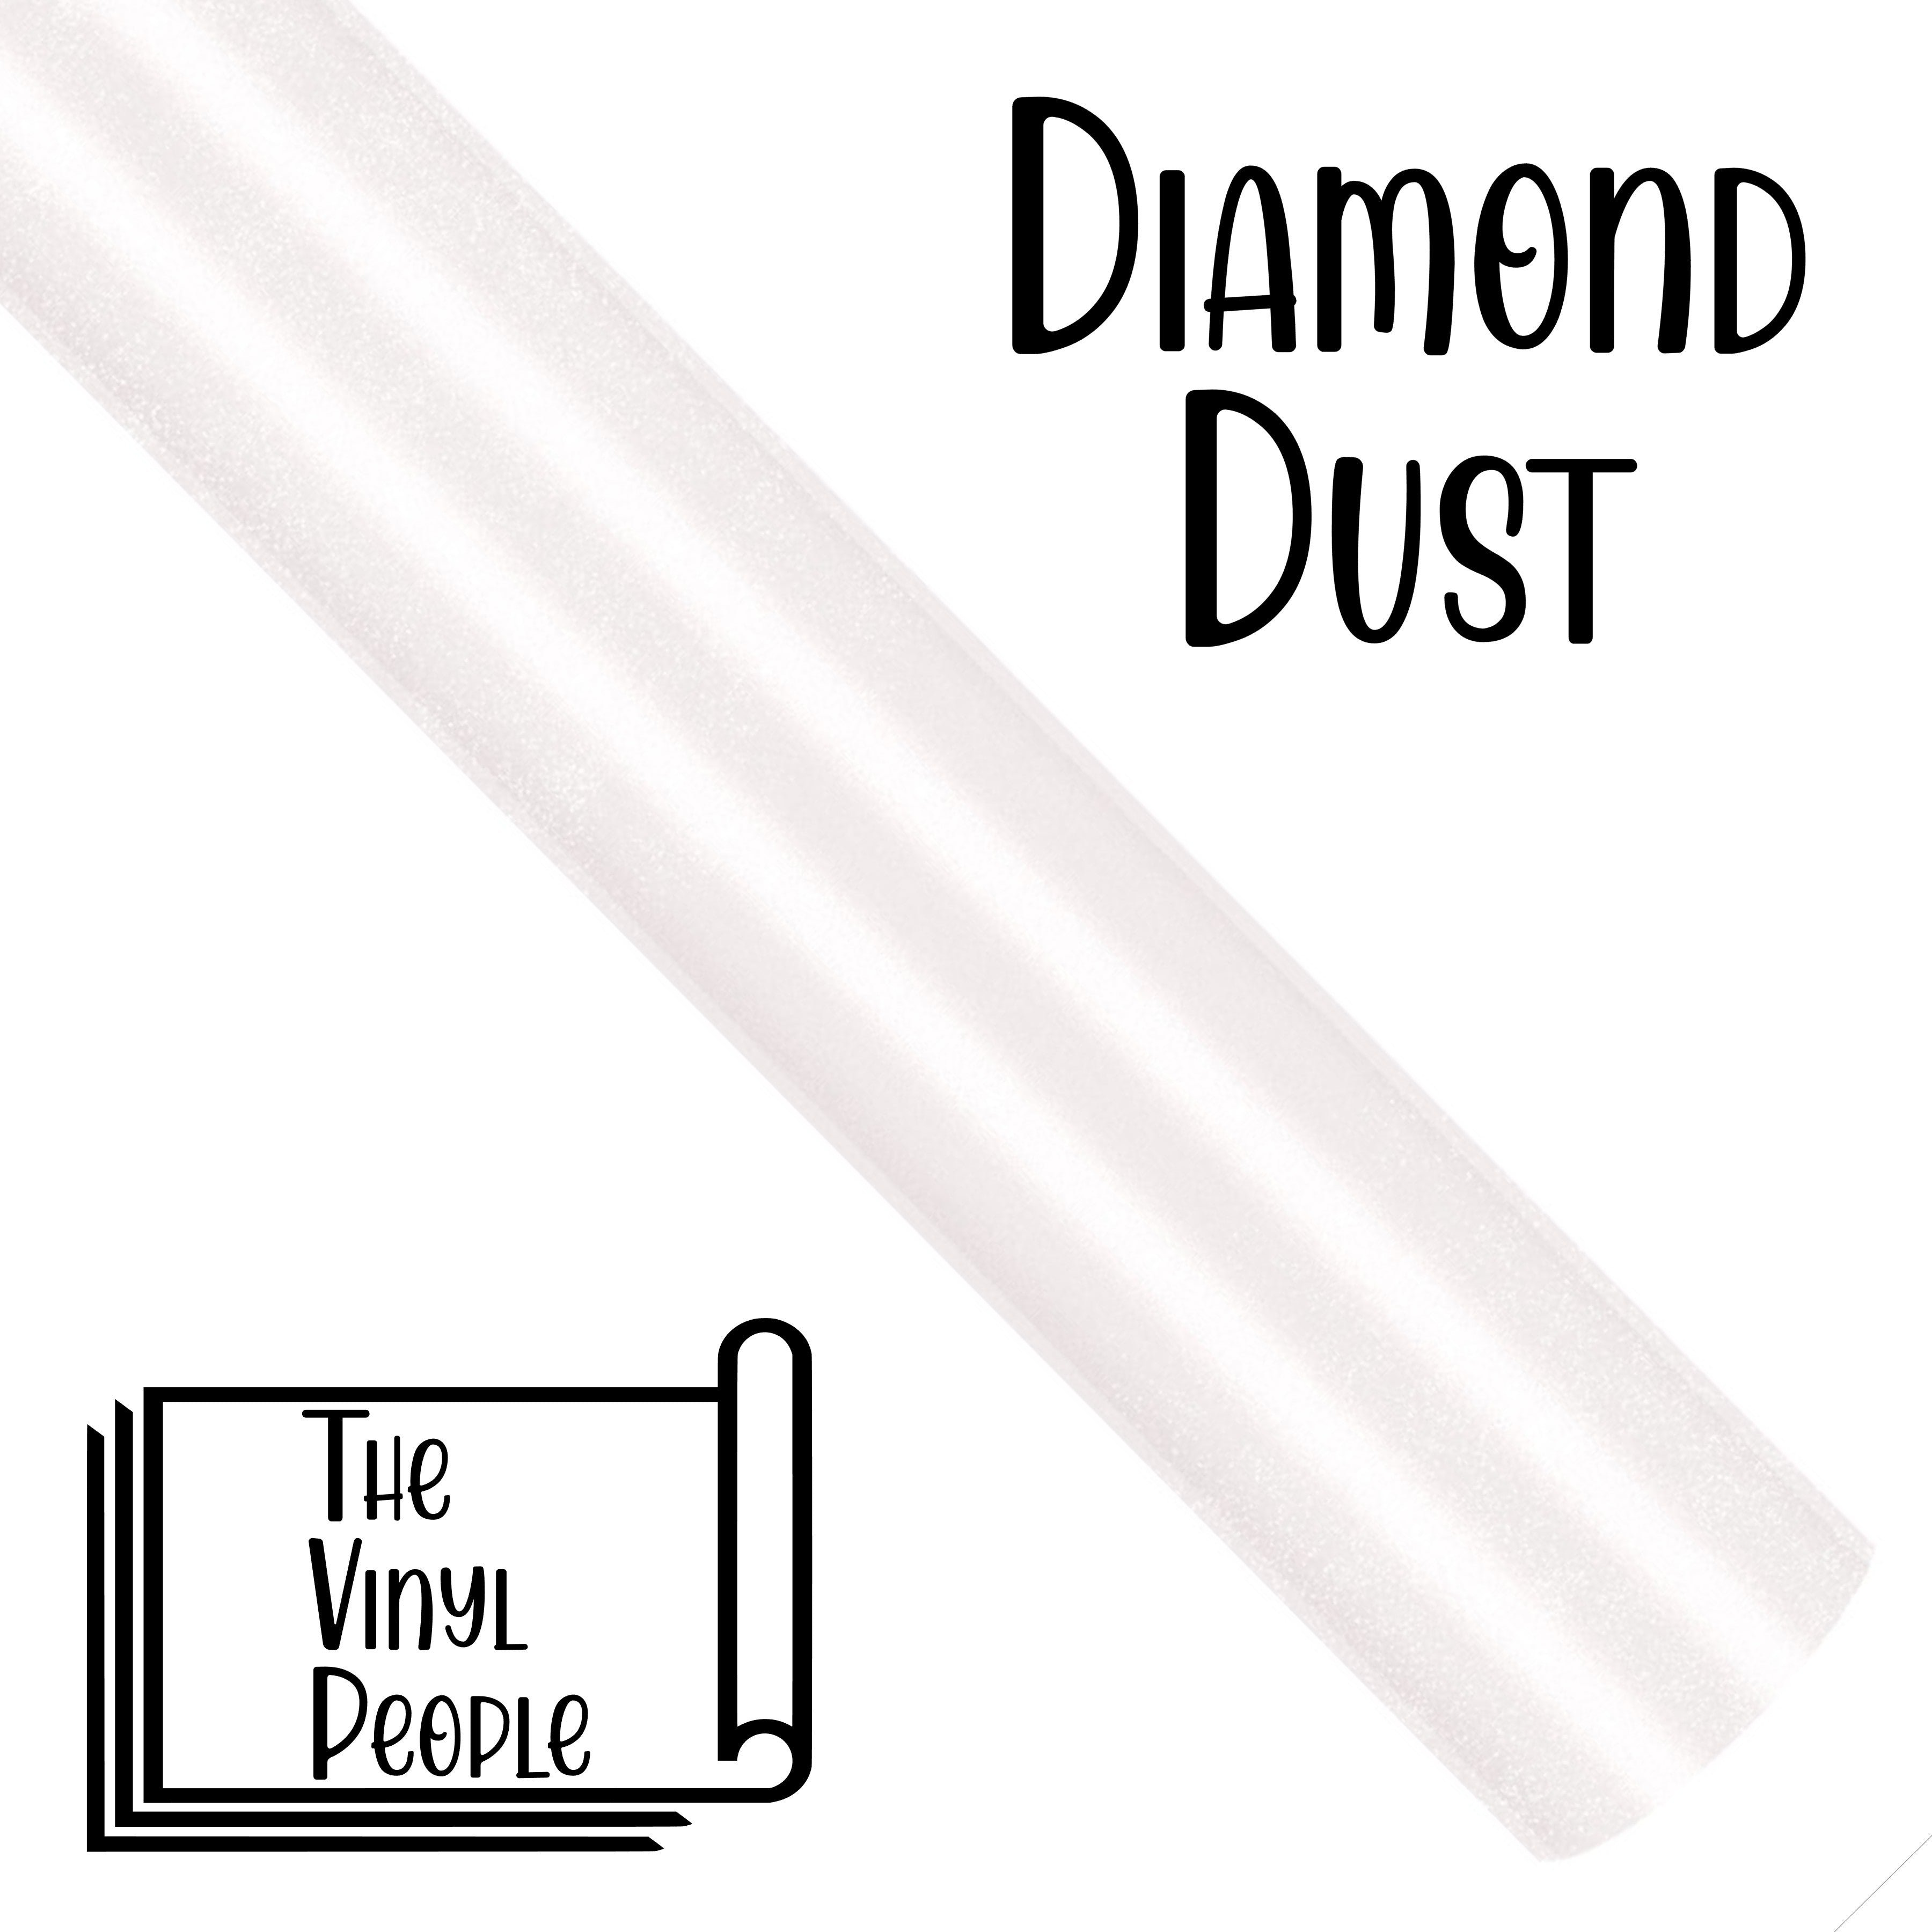 Diamond Dust - 12" x 24" roll